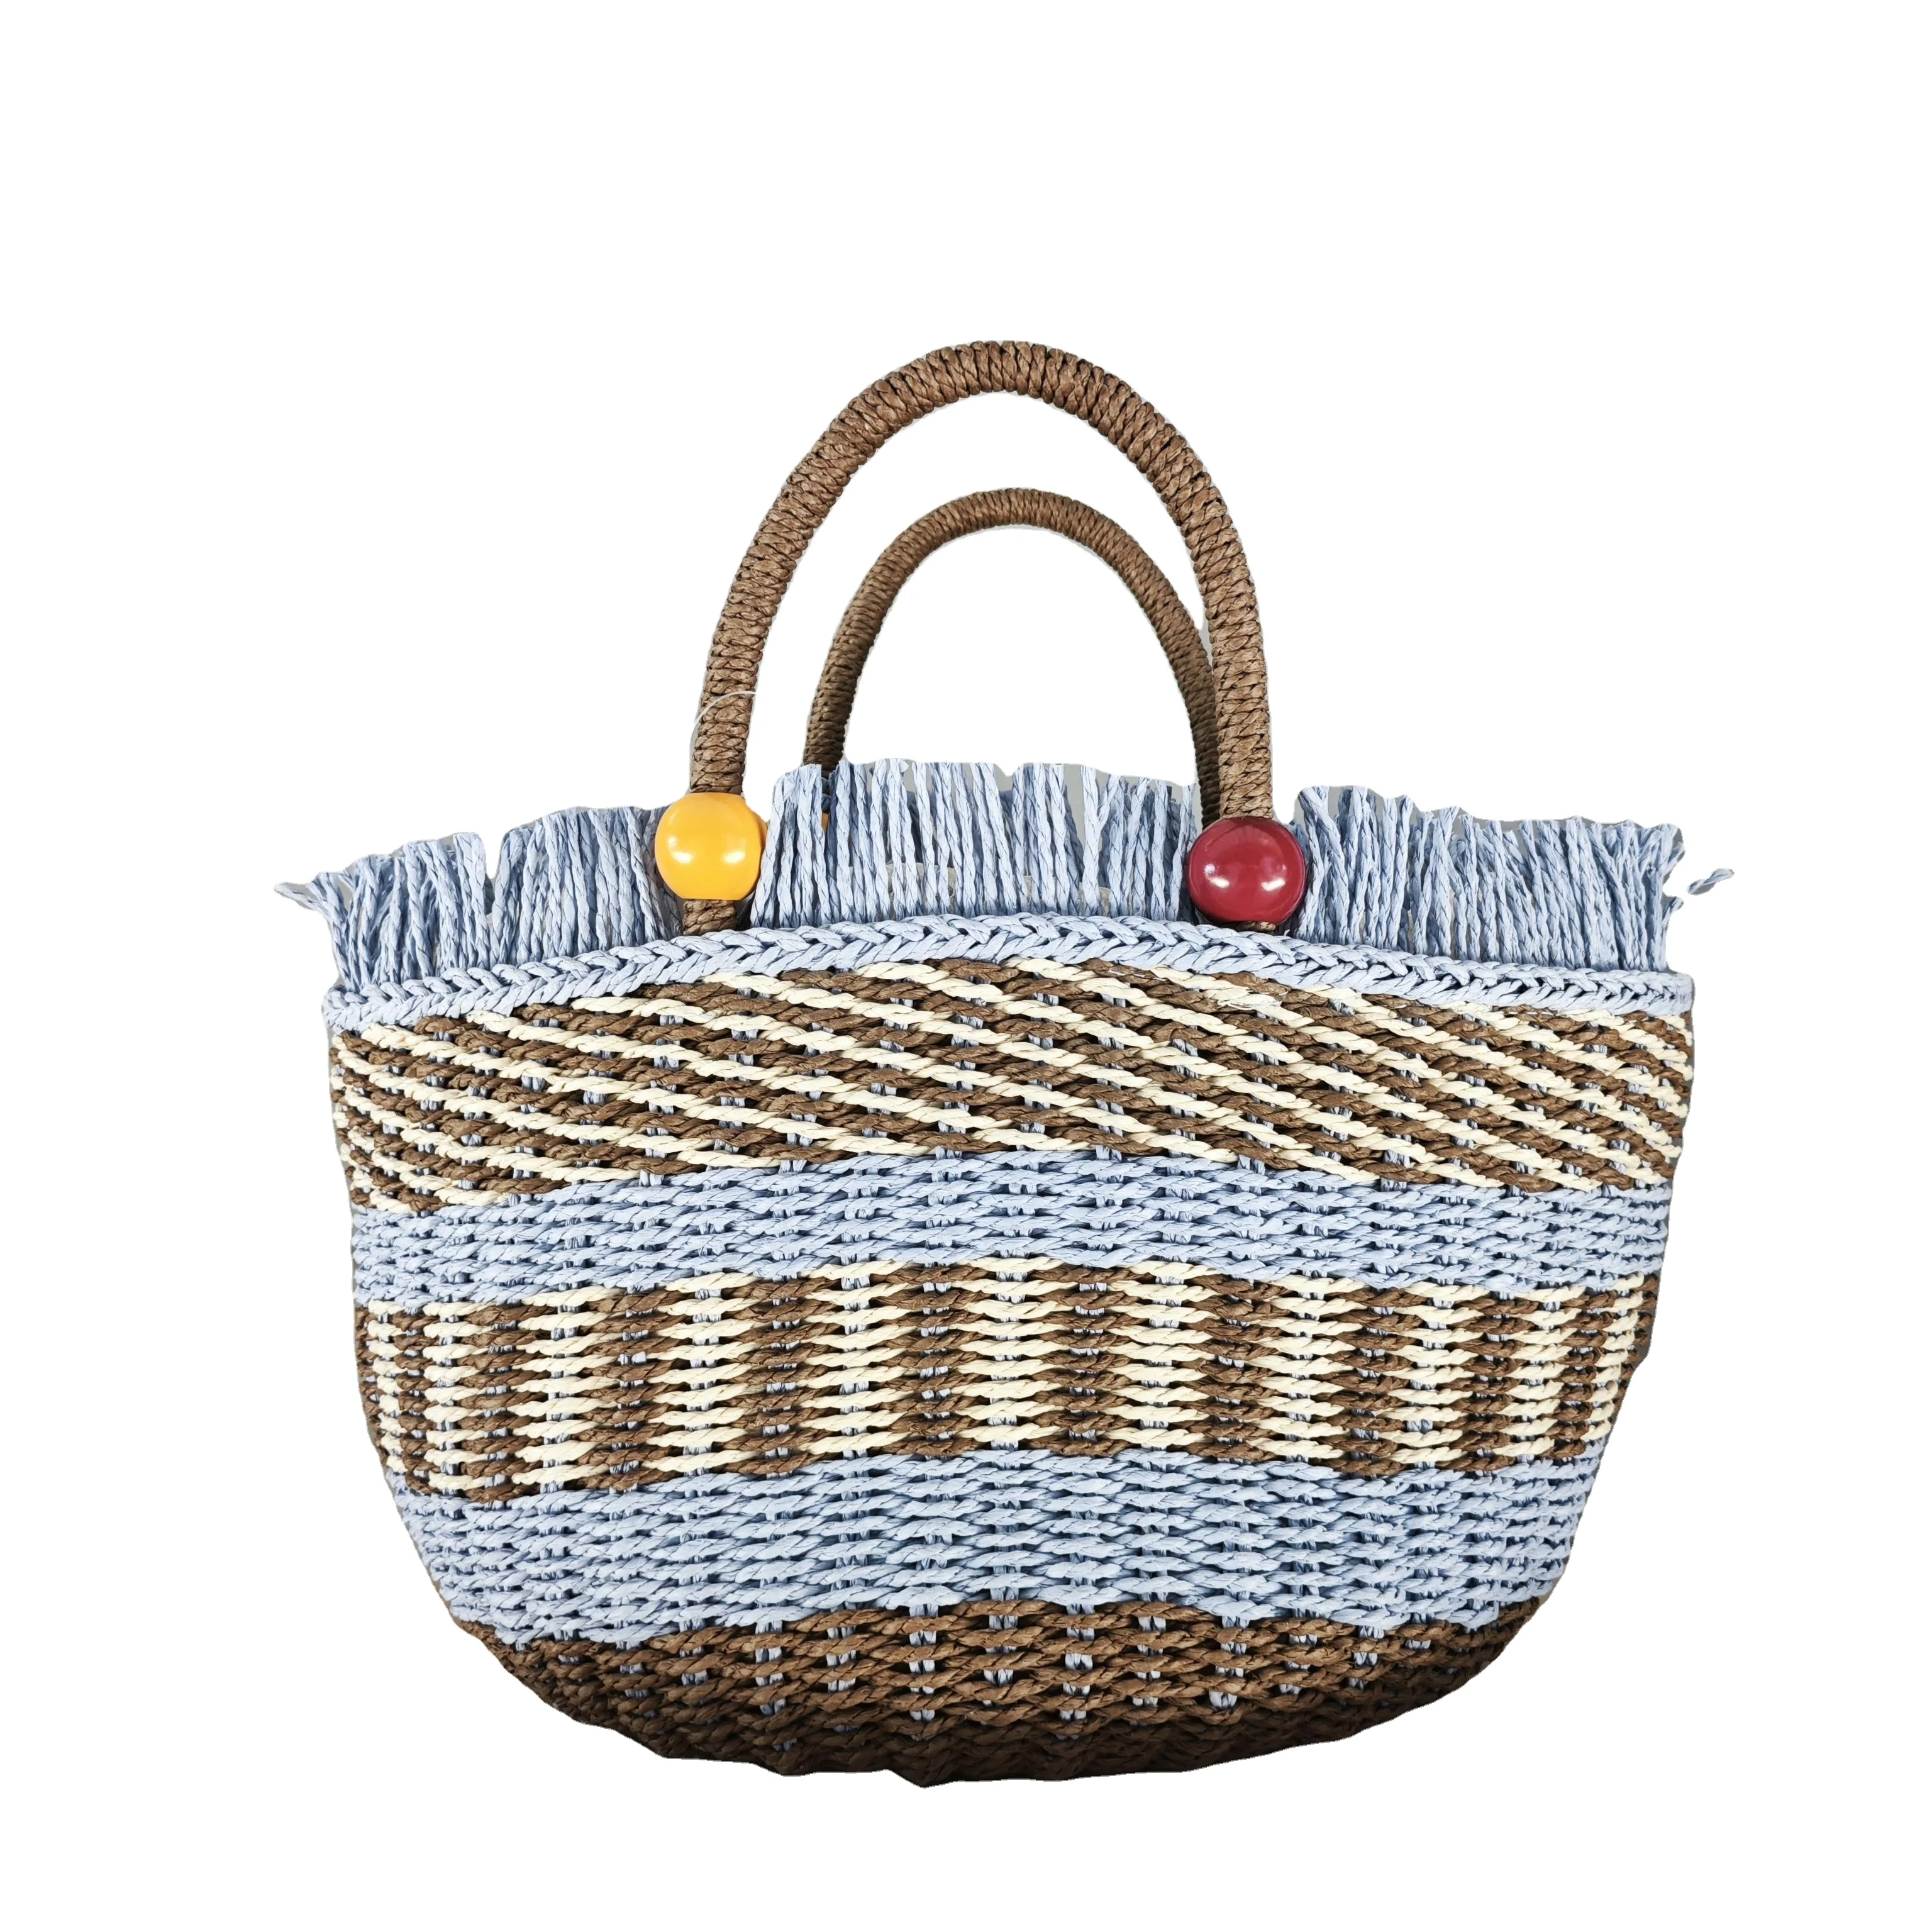 New wholesale woven paper rope bag handbag beach bag crochet bag